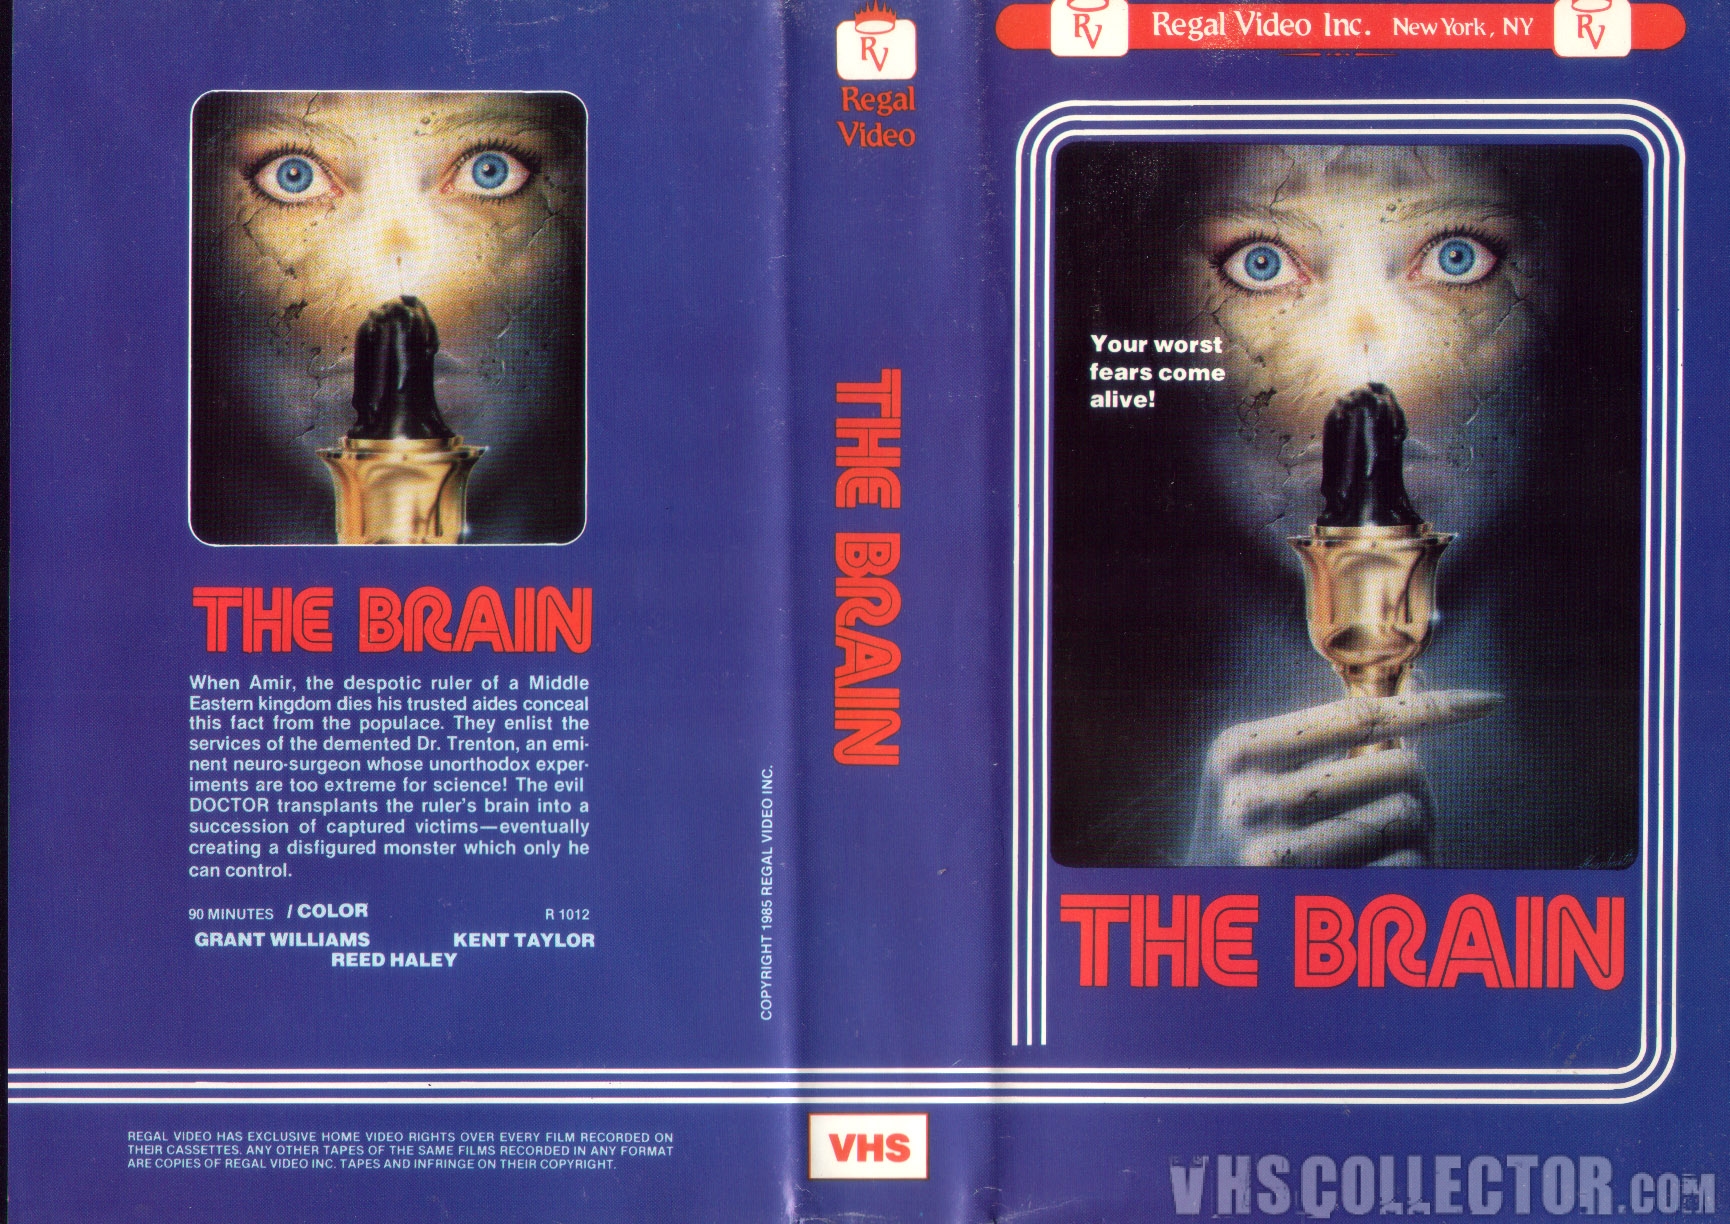 The Brain | VHSCollector.com